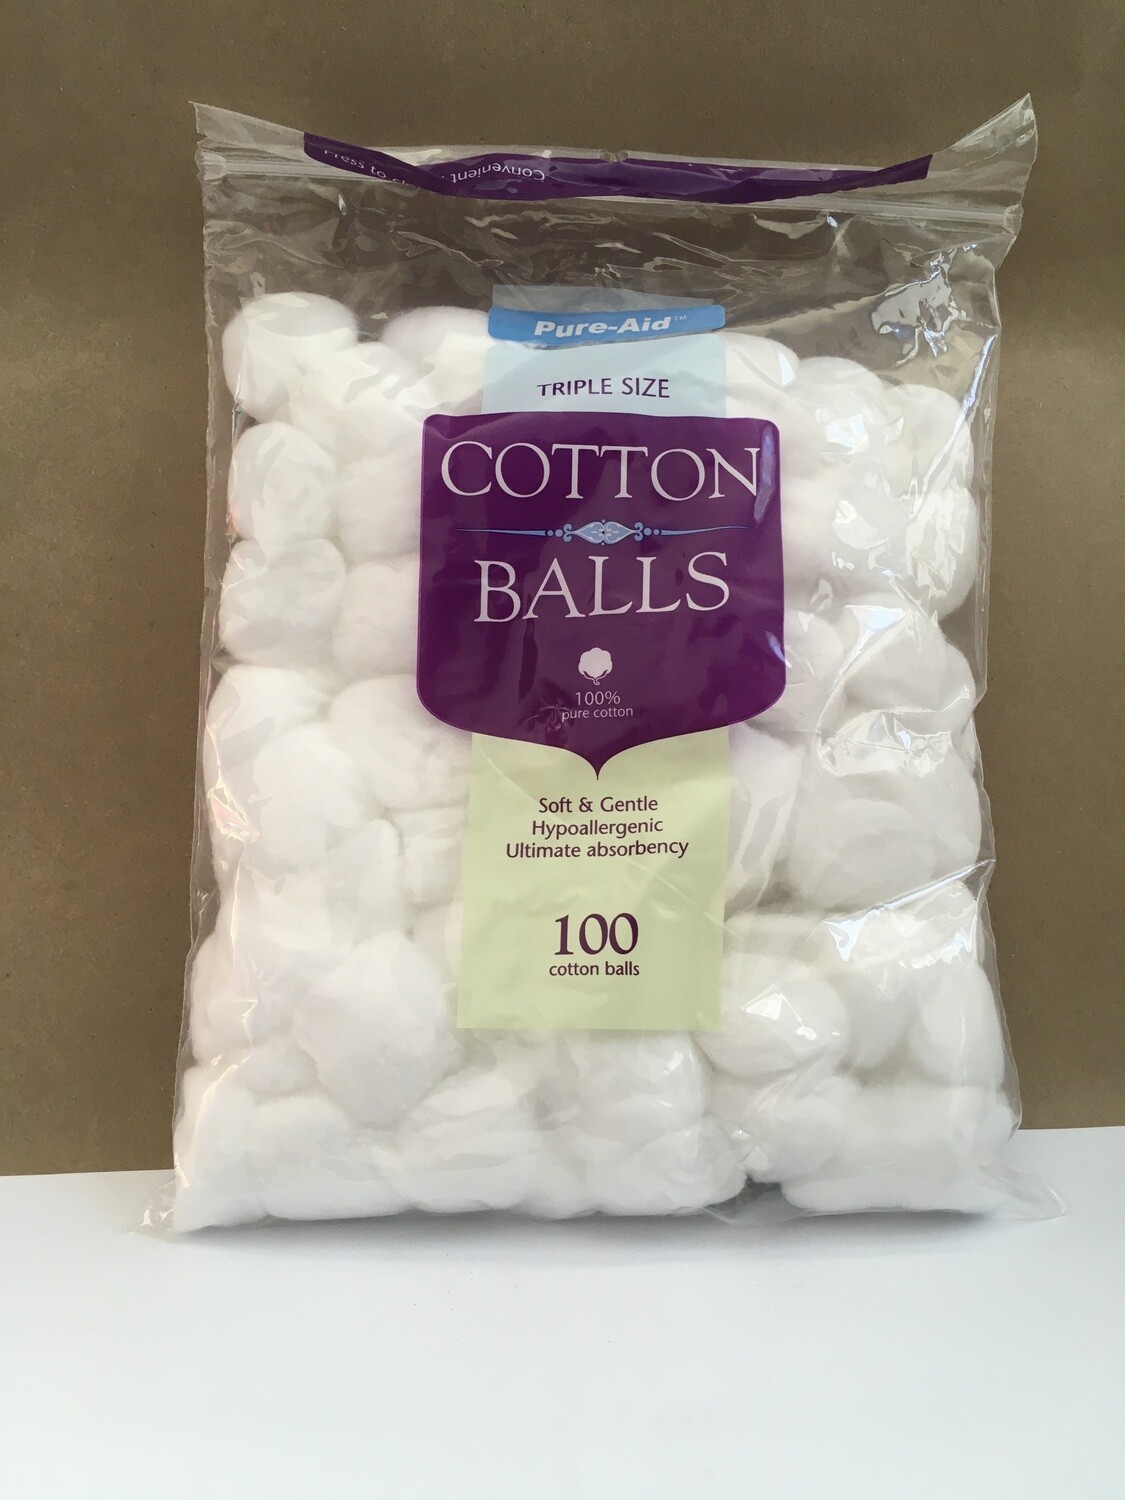 Health and Beauty / Beauty / Pure-Aid Cotton Balls